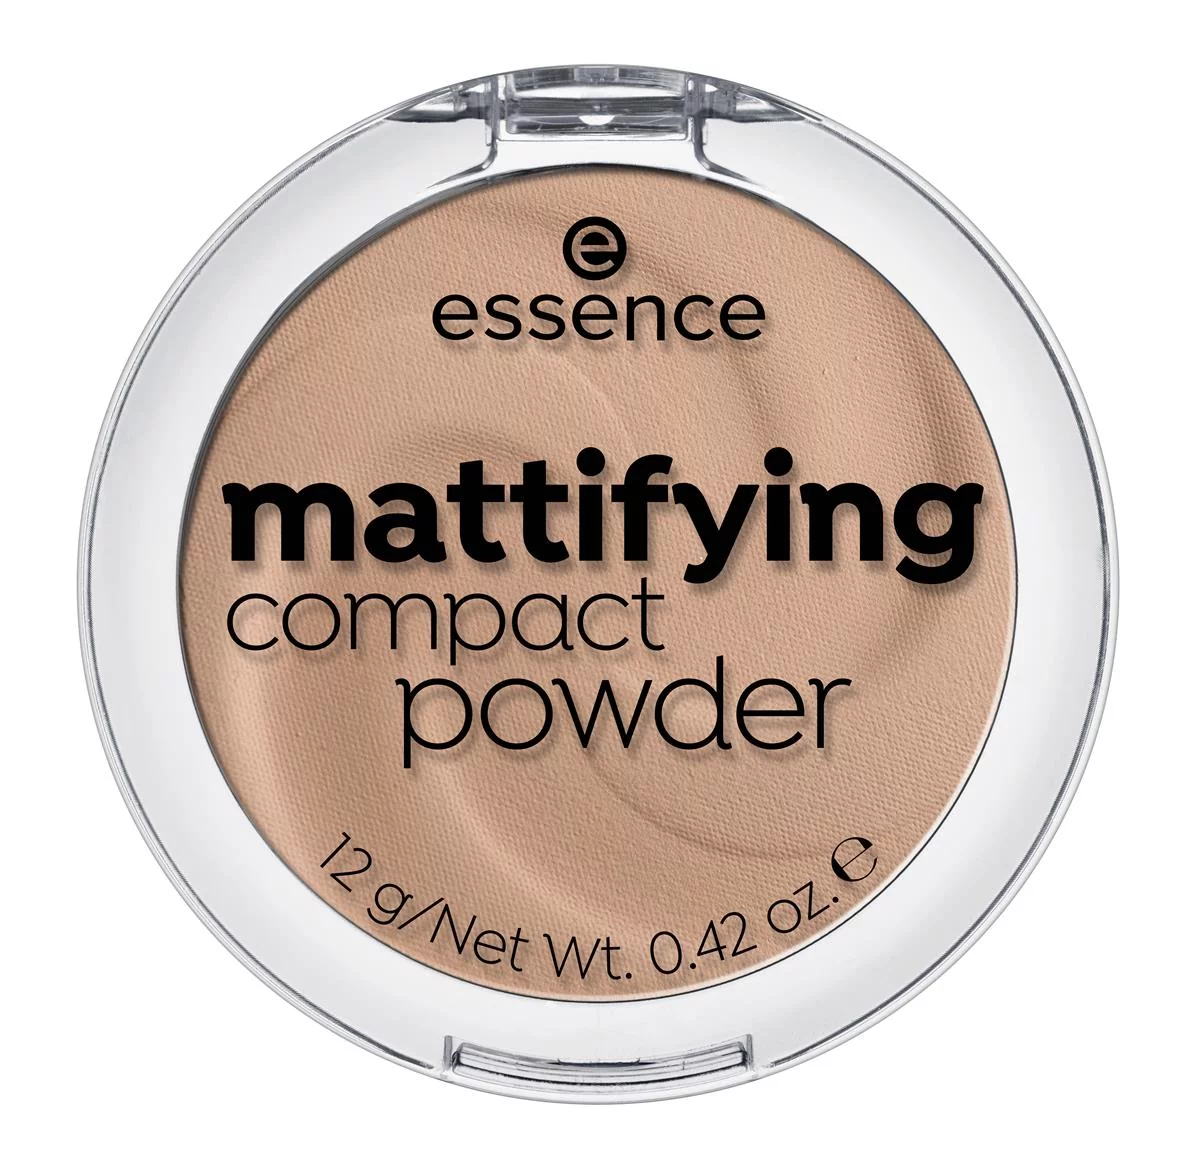 Essence Mattifying Compact Powder, puder matujący w kompakcie 02 Soft Beige, 11 g